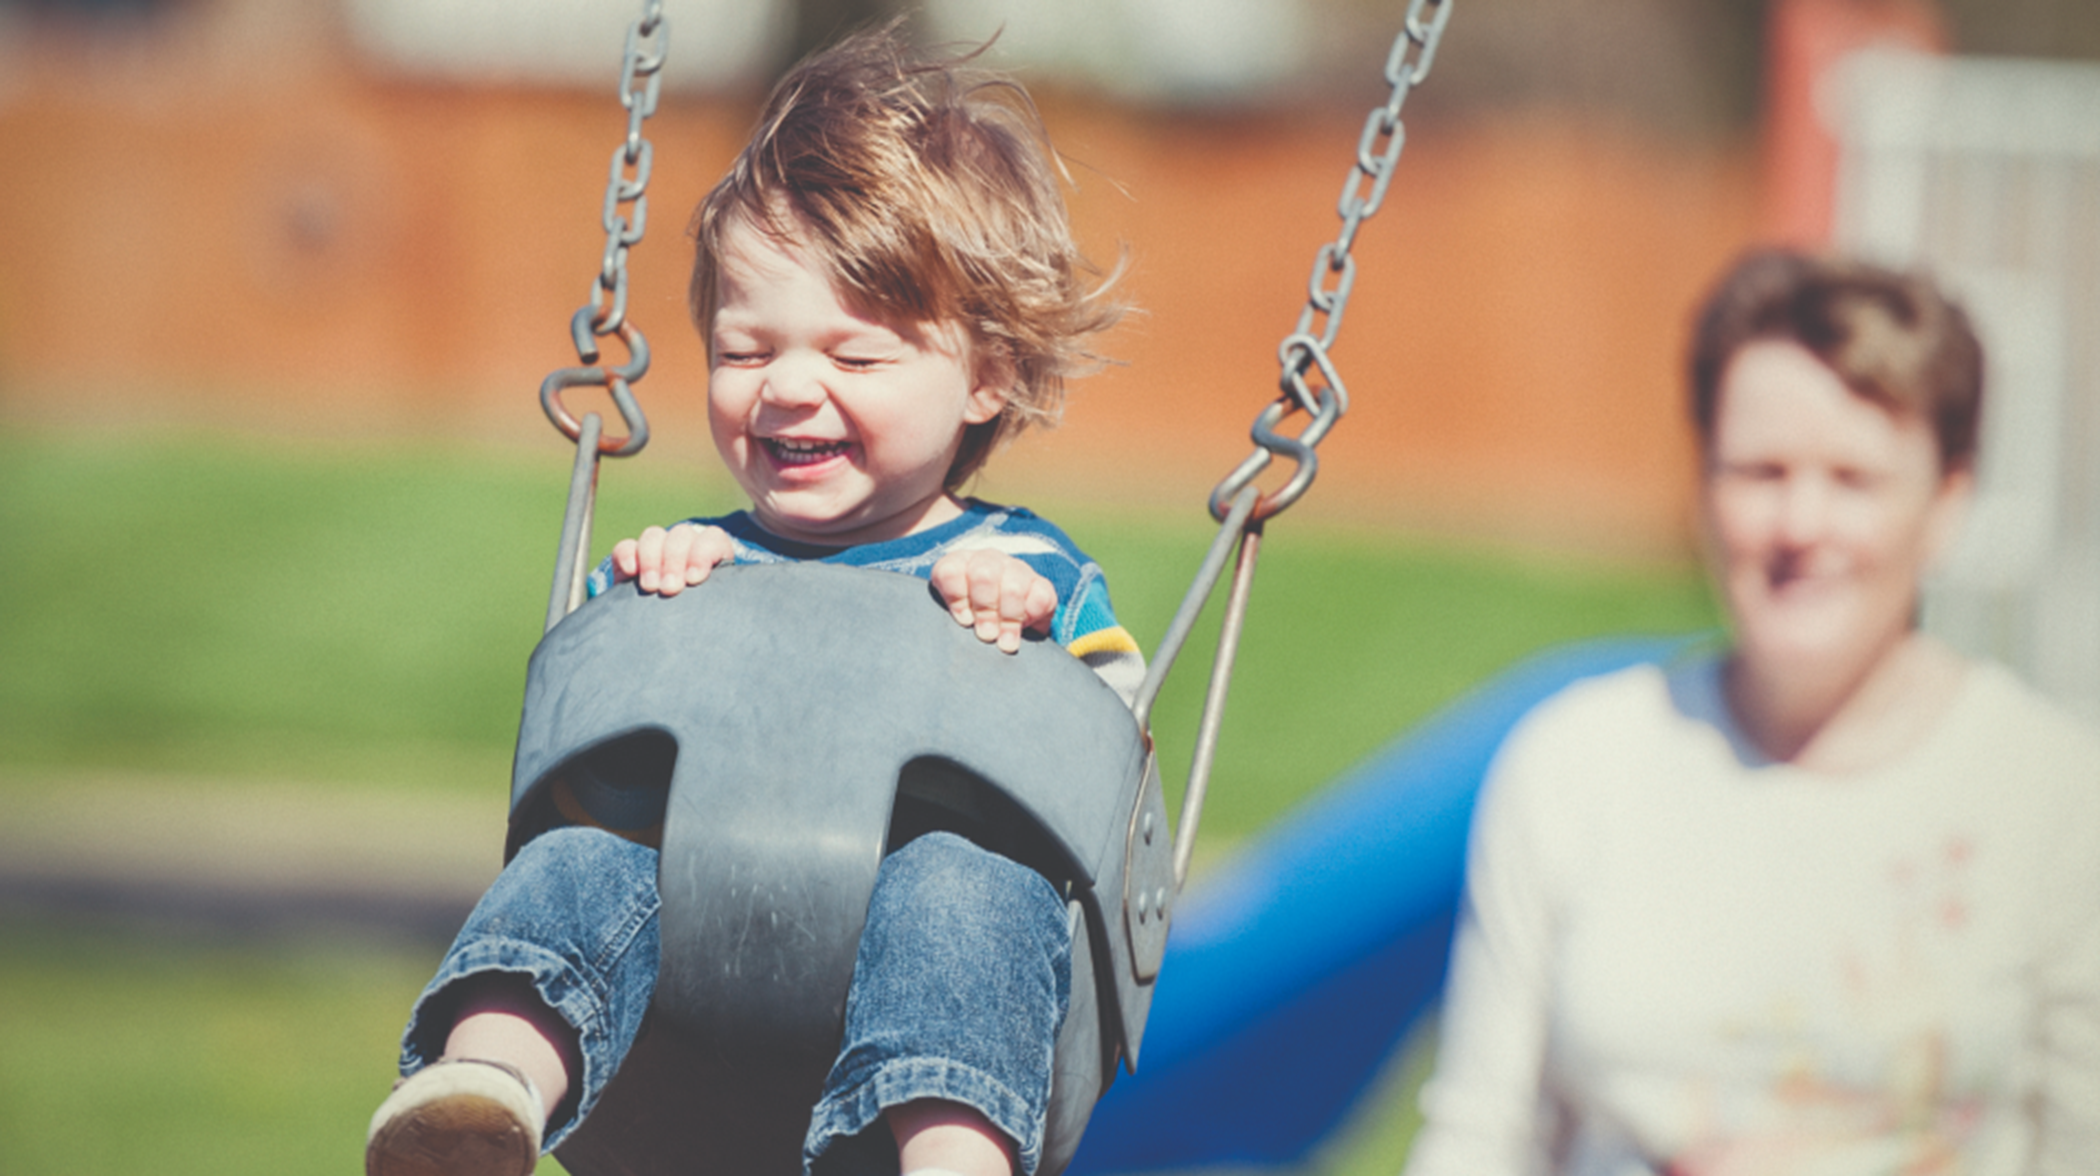 Kid on swingset in playground